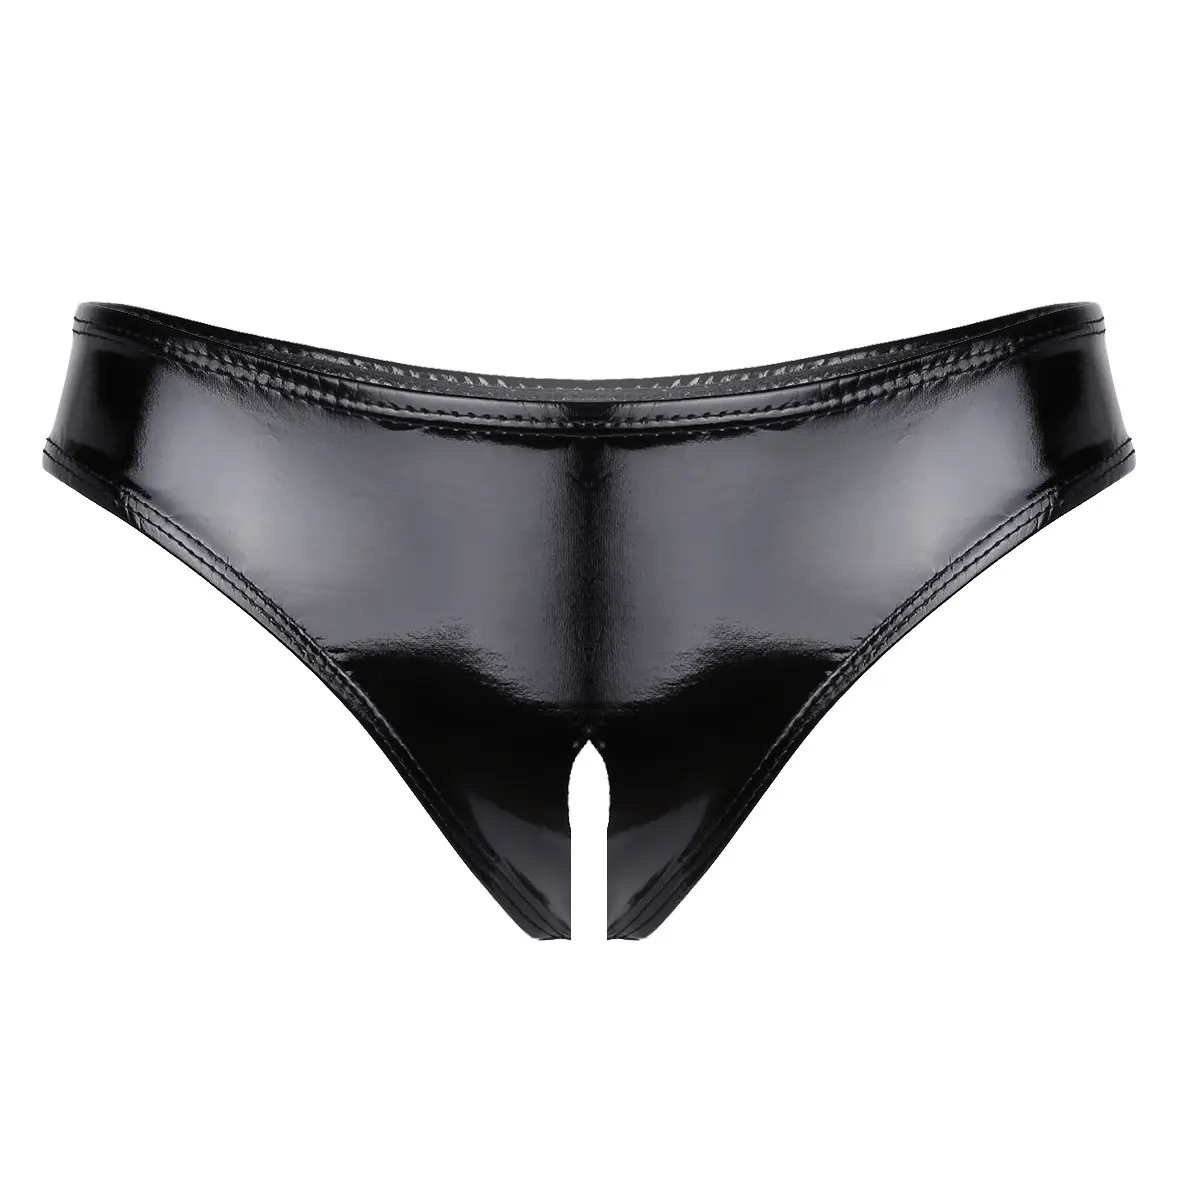 YiZYiF Sexy Women Lingerie Crotch Open Panties Wetlook Patent